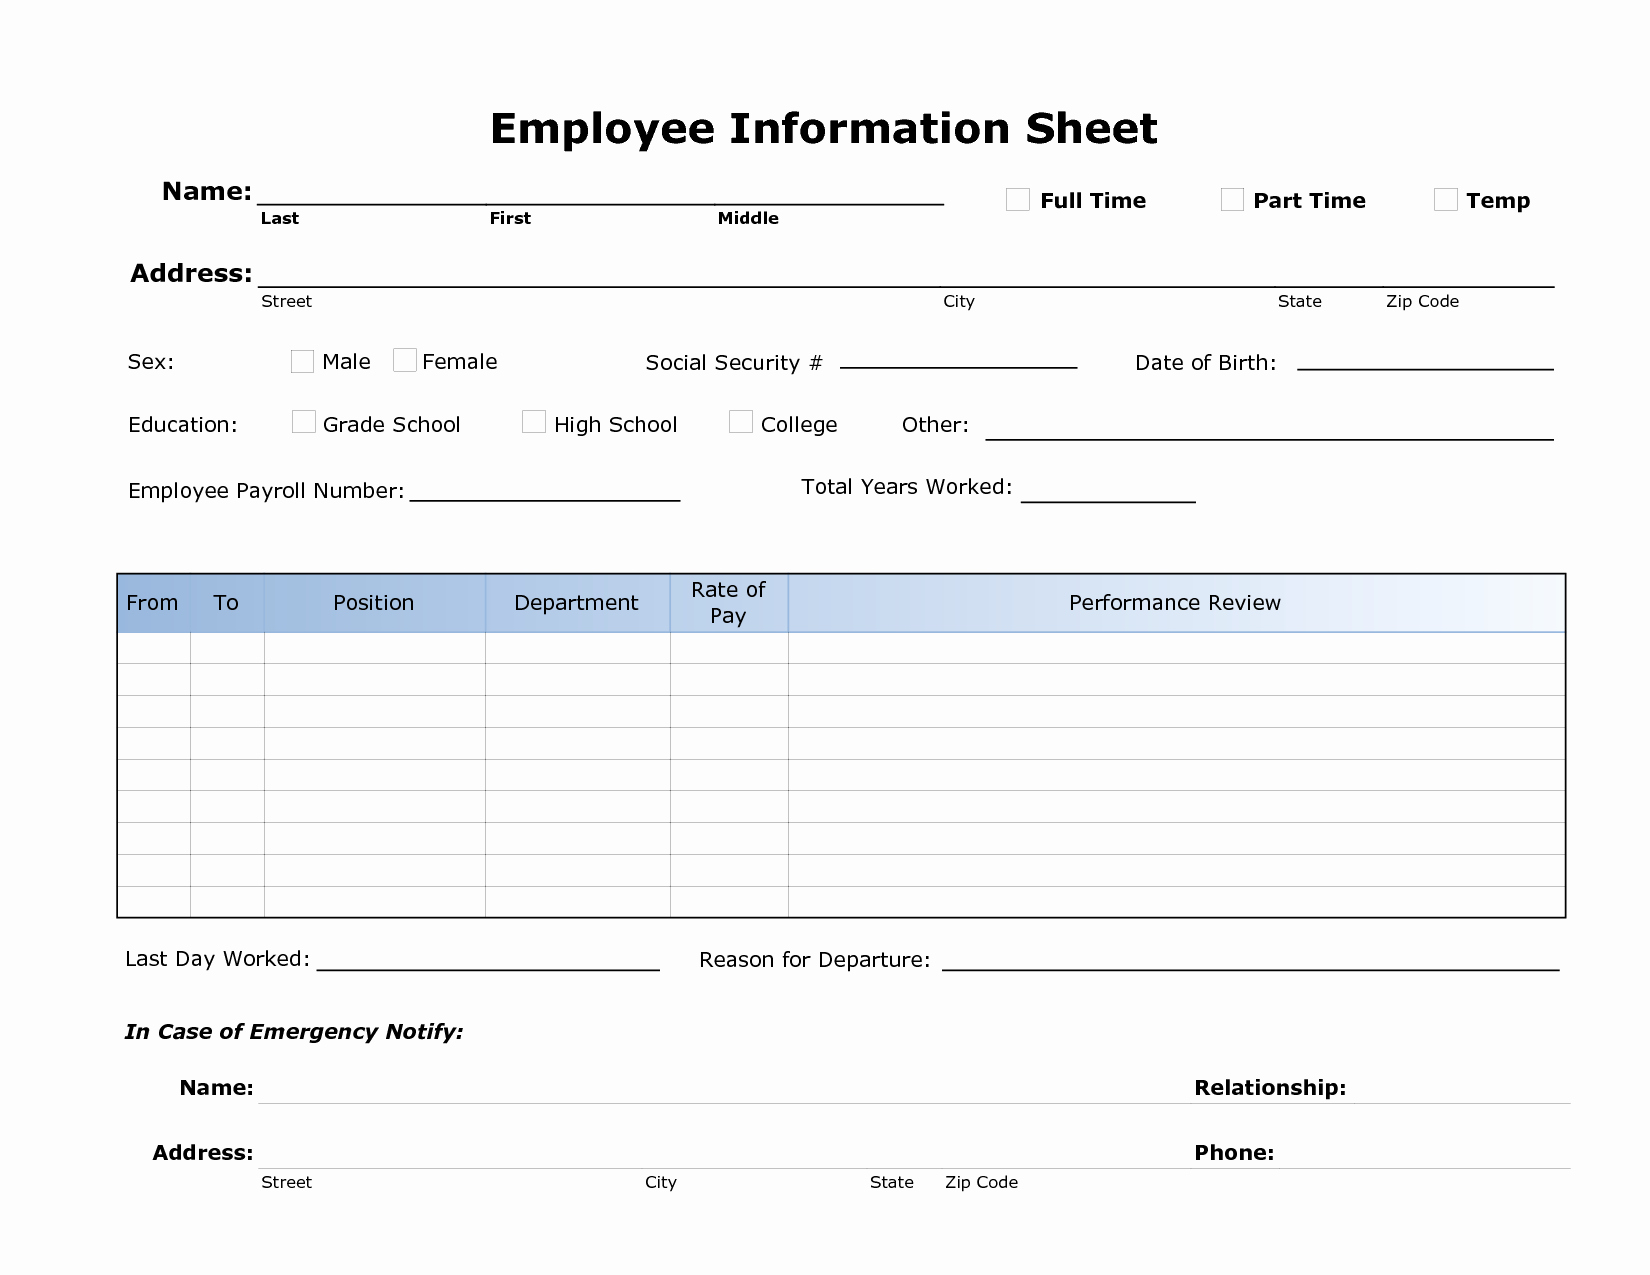 Employee Information Sheet Template Inspirational Best S Of Employee Information Template Employee